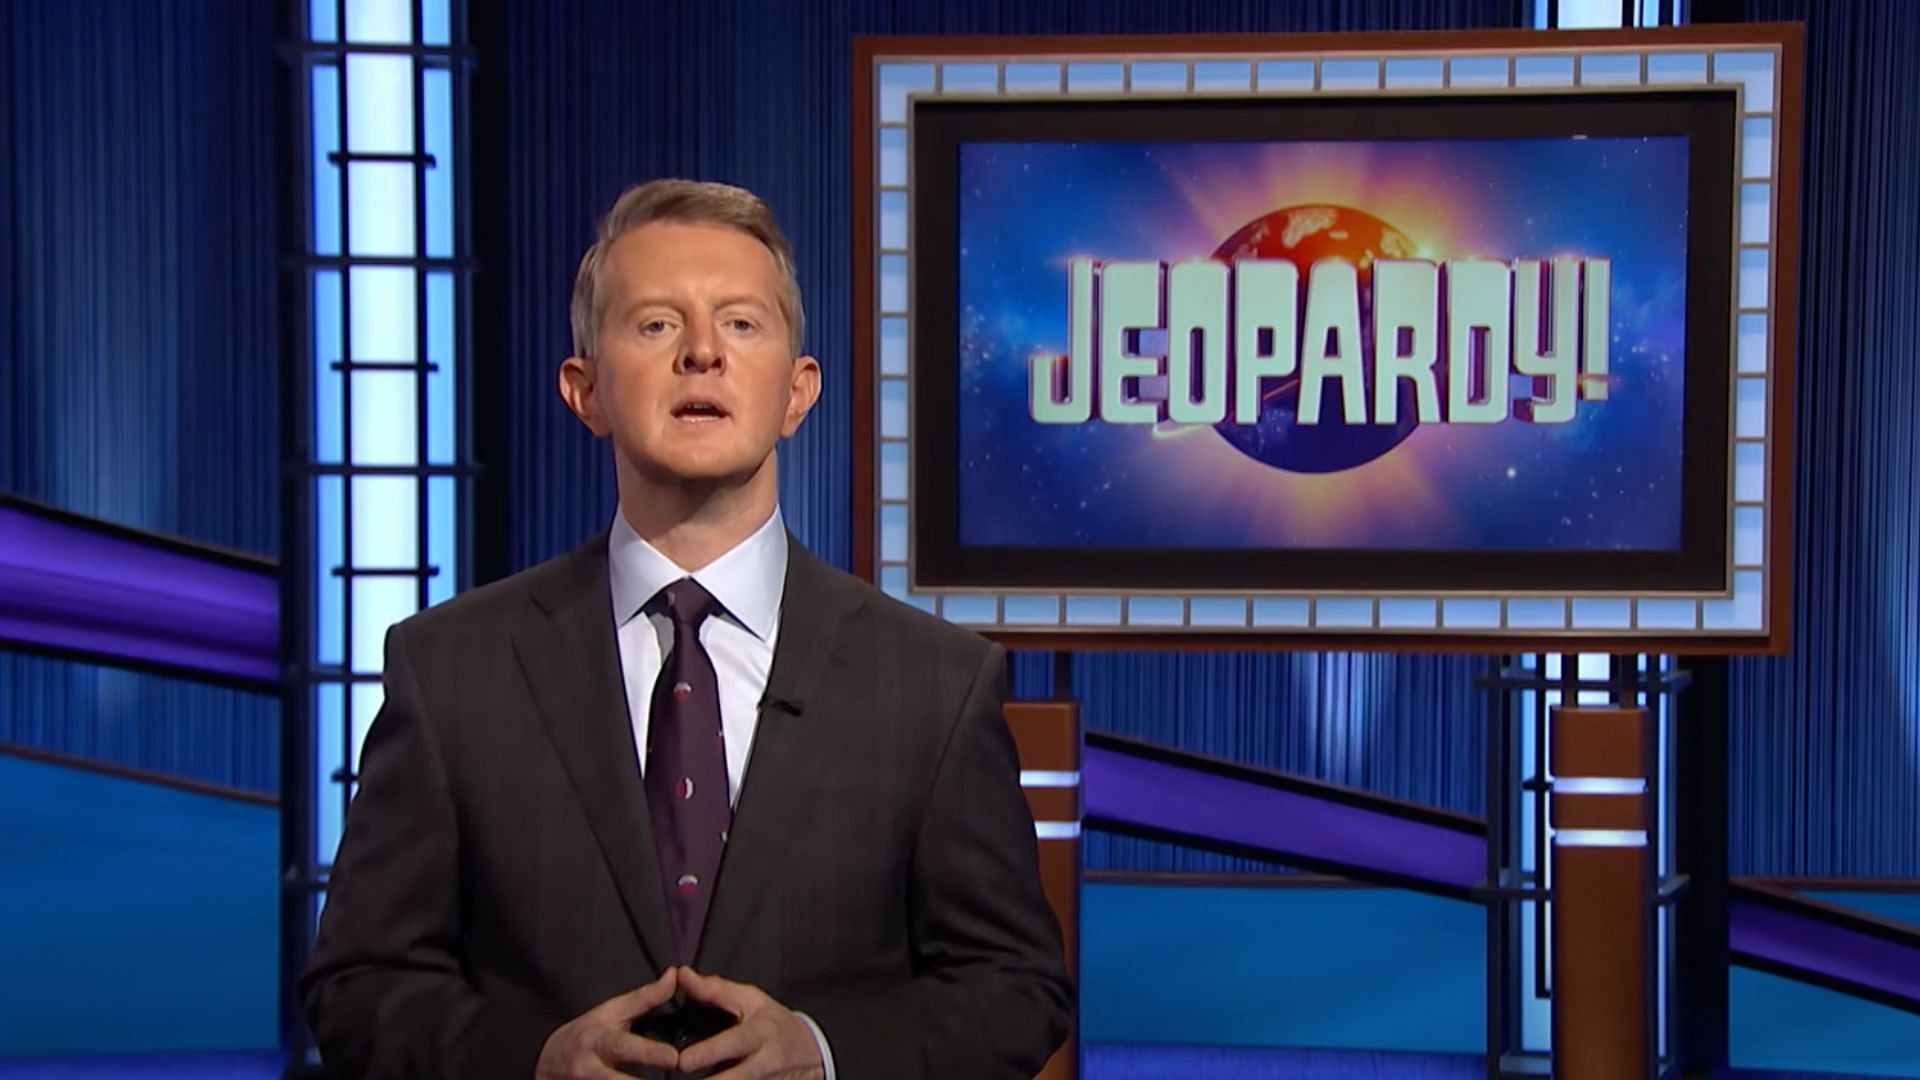 Who won Jeopardy! tonight? July 20, 2022, Wednesday